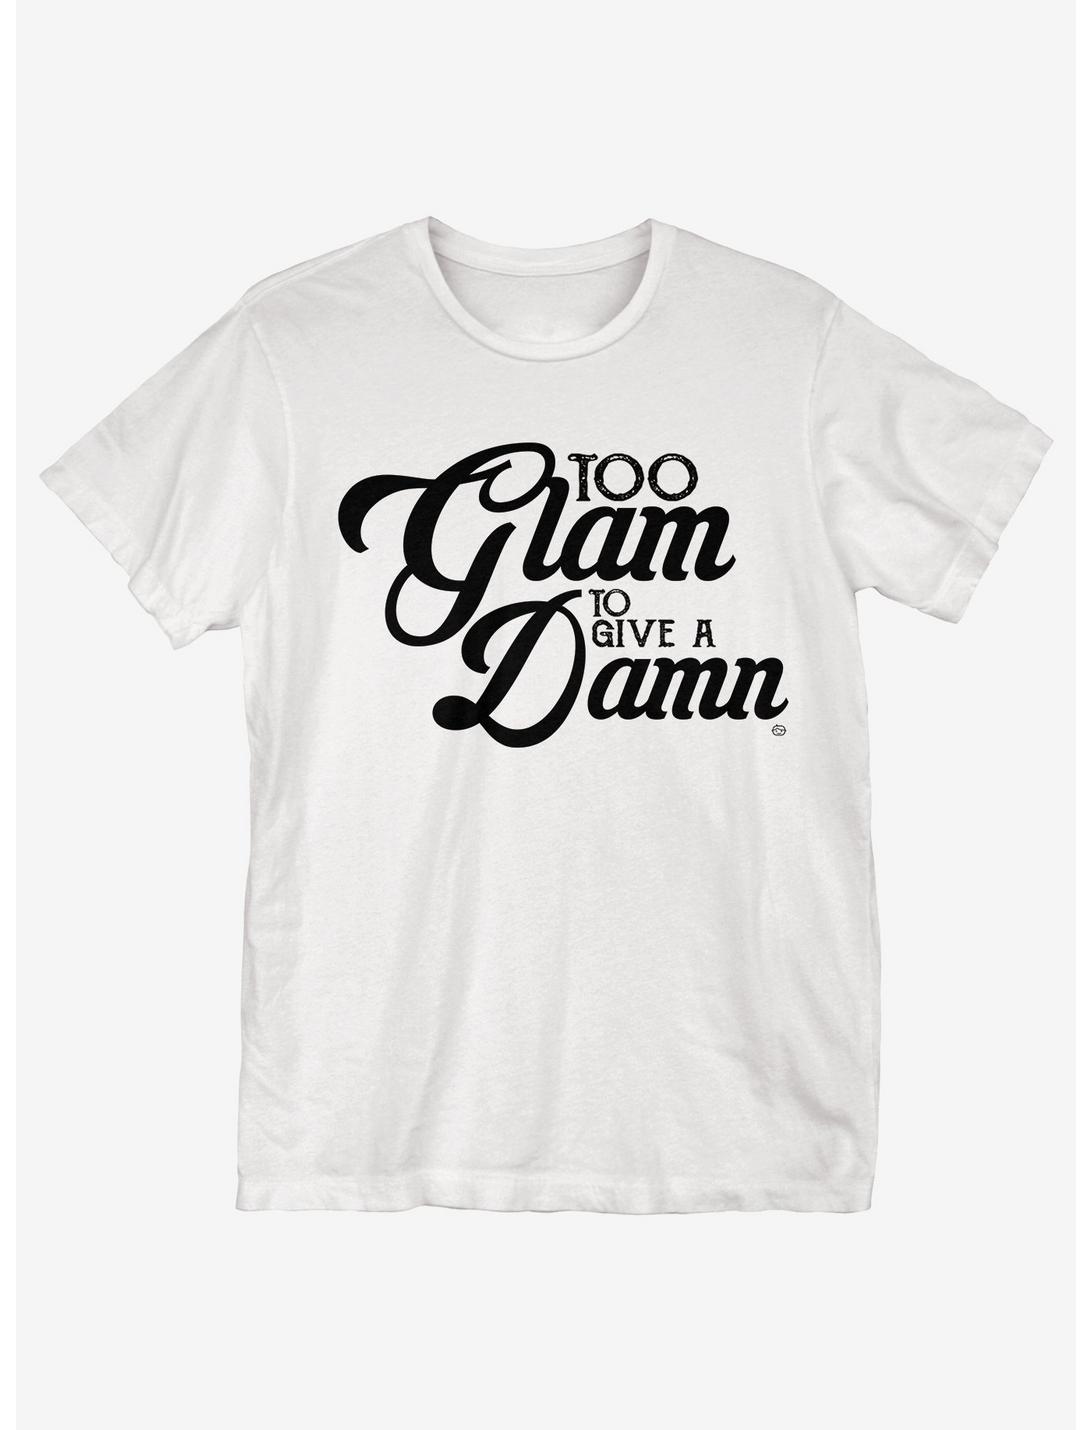 Too Glam T-Shirt, WHITE, hi-res